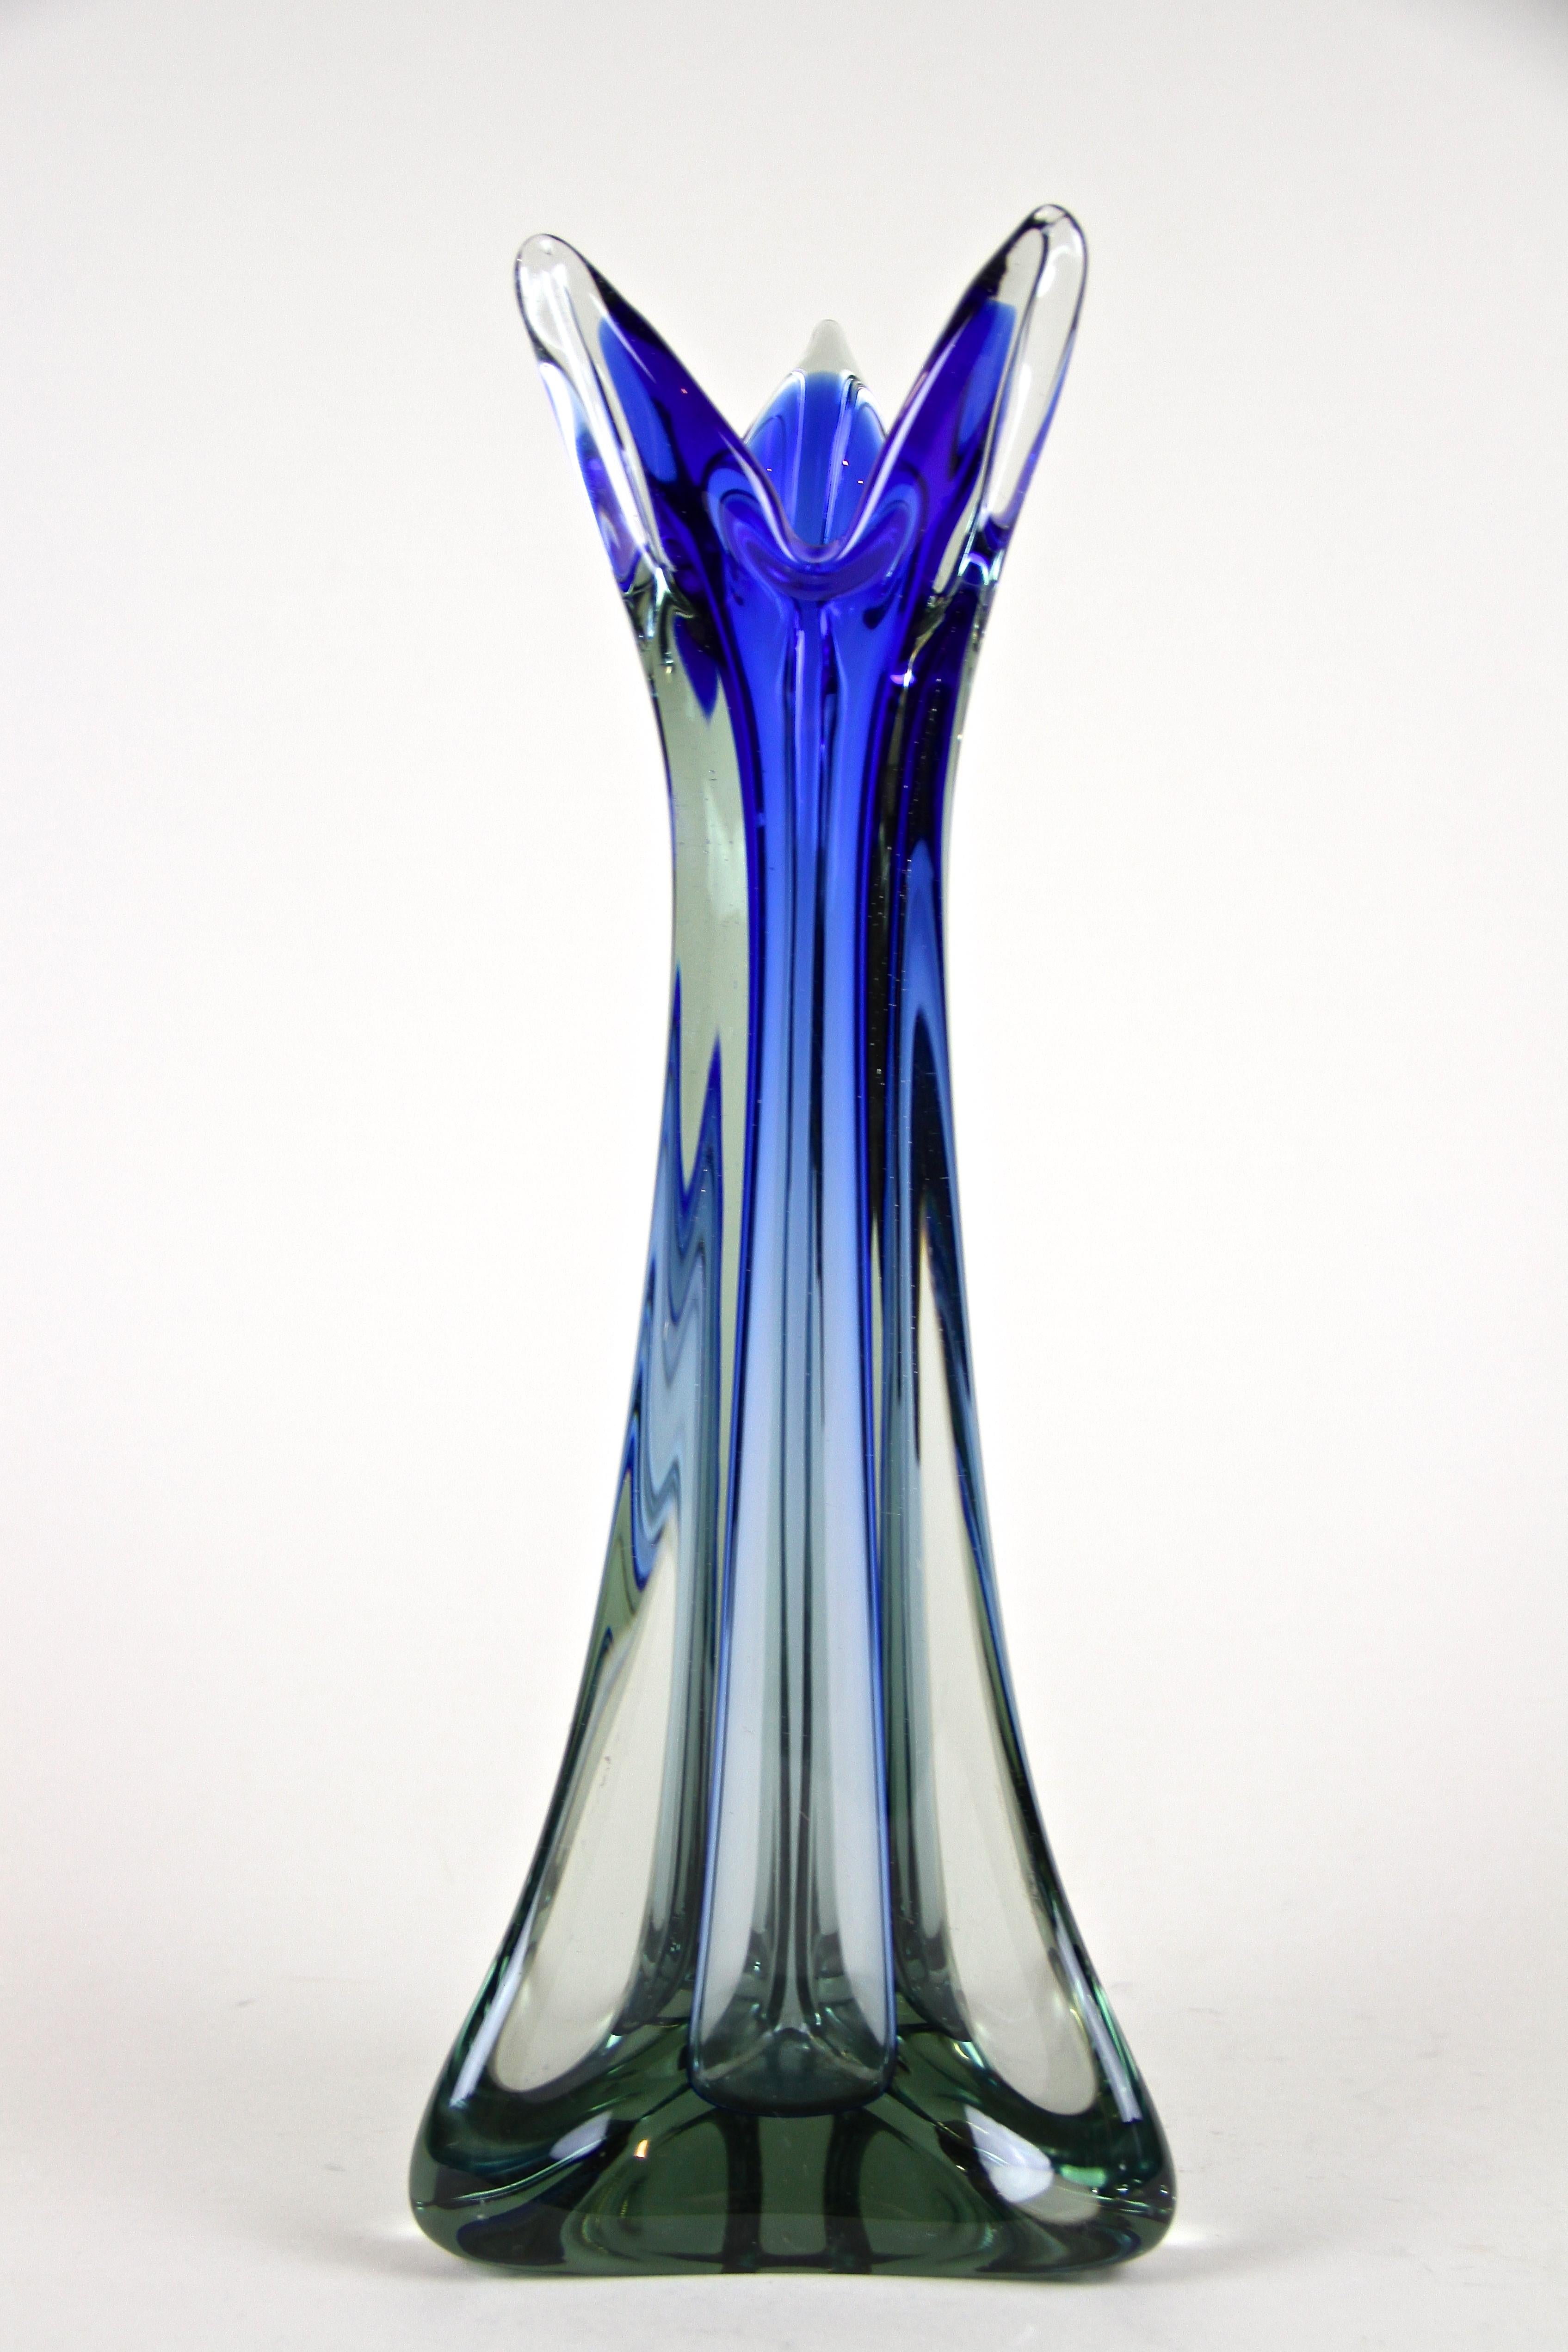 Mid-Century Modern 20th Century Murano Glass Vase in Grey / Blue Tones, Italy circa 1970